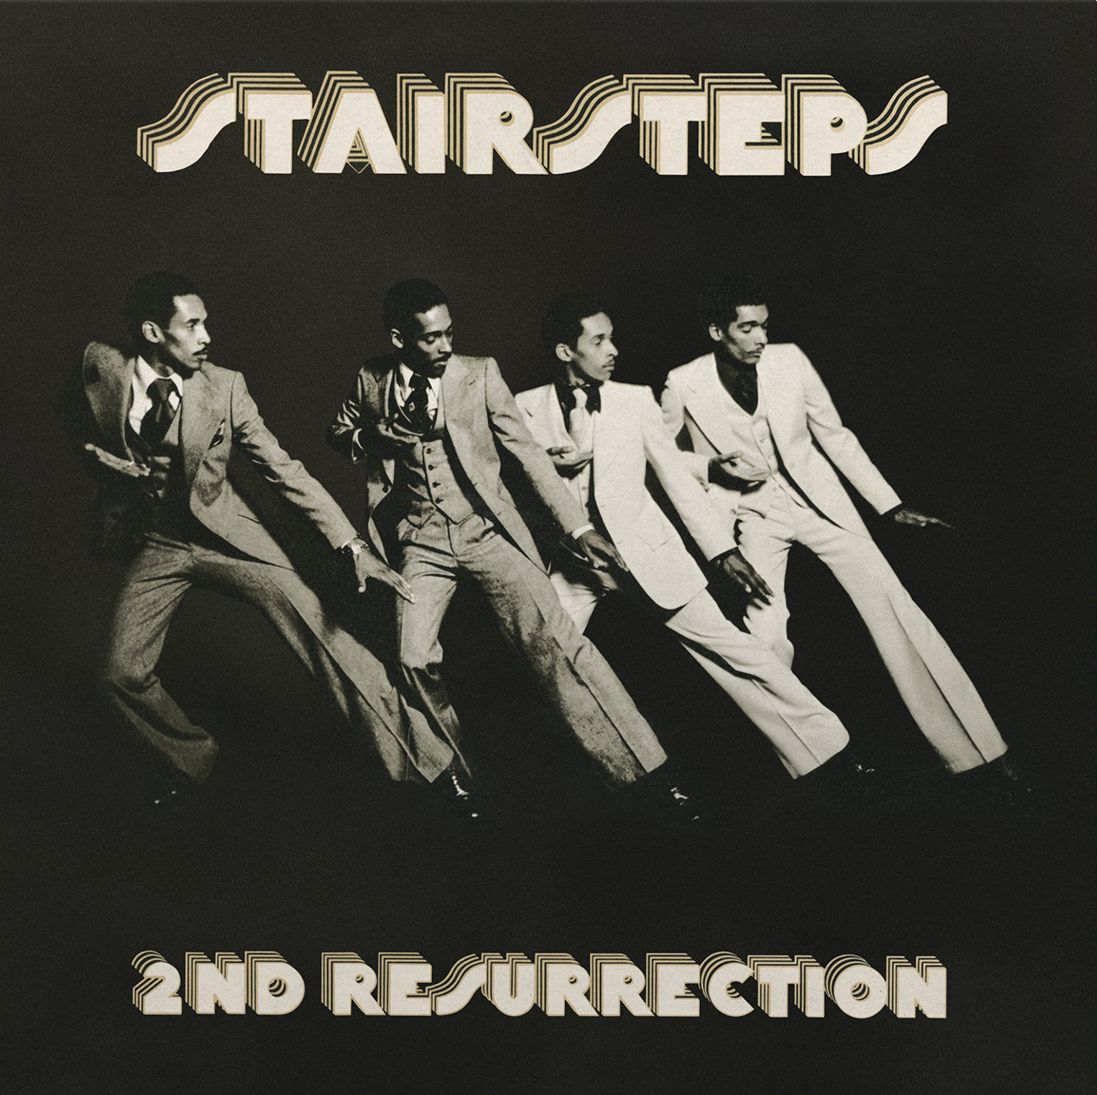 STAIRSTEPS (AKA THE FIVE STAIRSTEPS) - 2nd Resurrection - LP - Vinyl [RSD23]